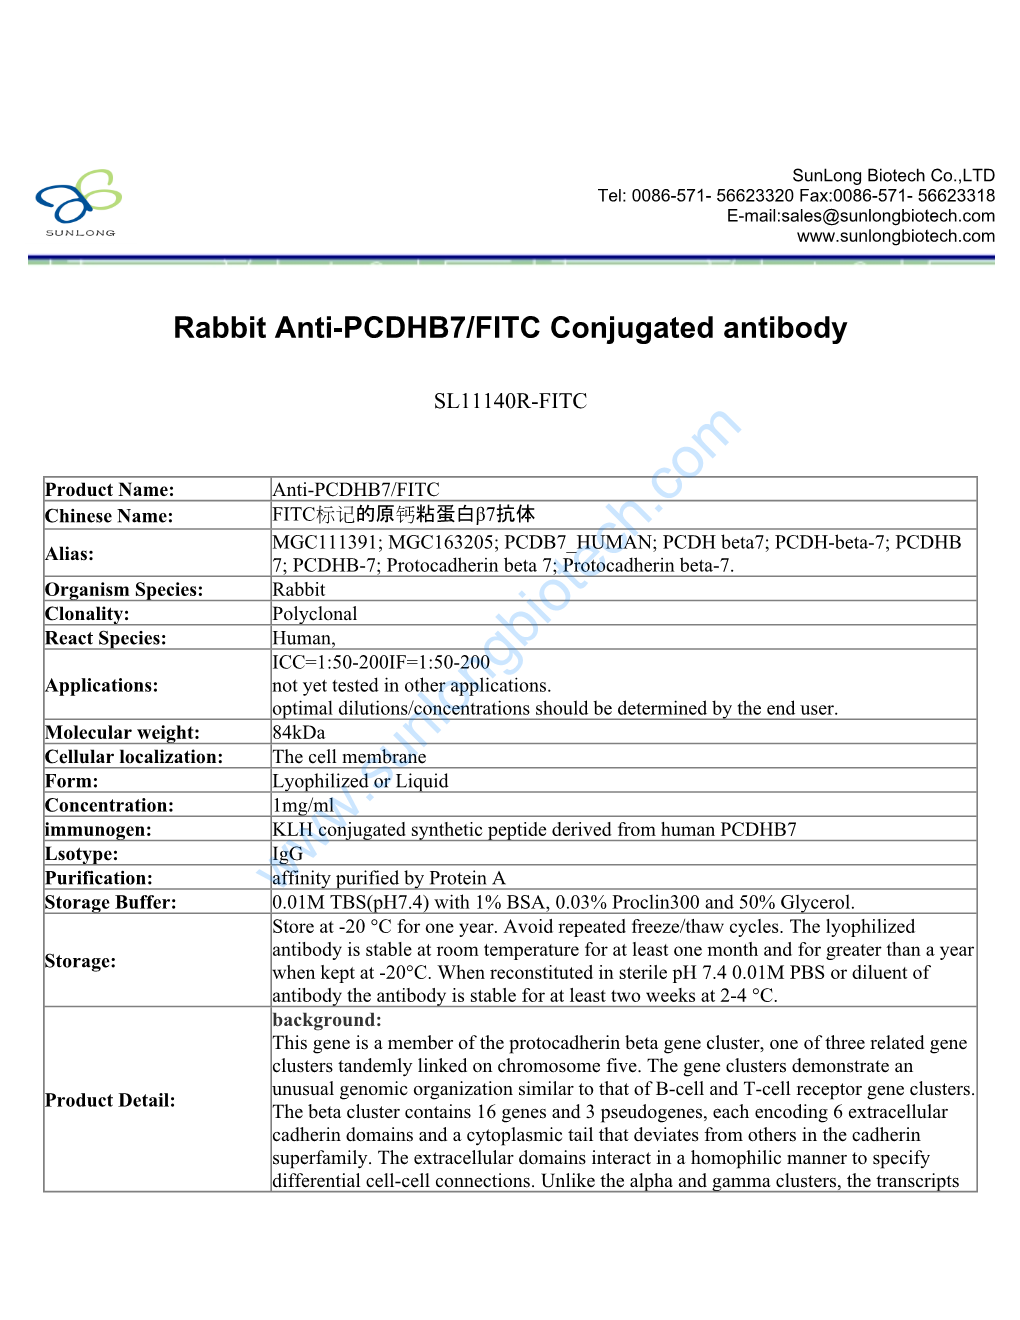 Rabbit Anti-PCDHB7/FITC Conjugated Antibody-SL11140R